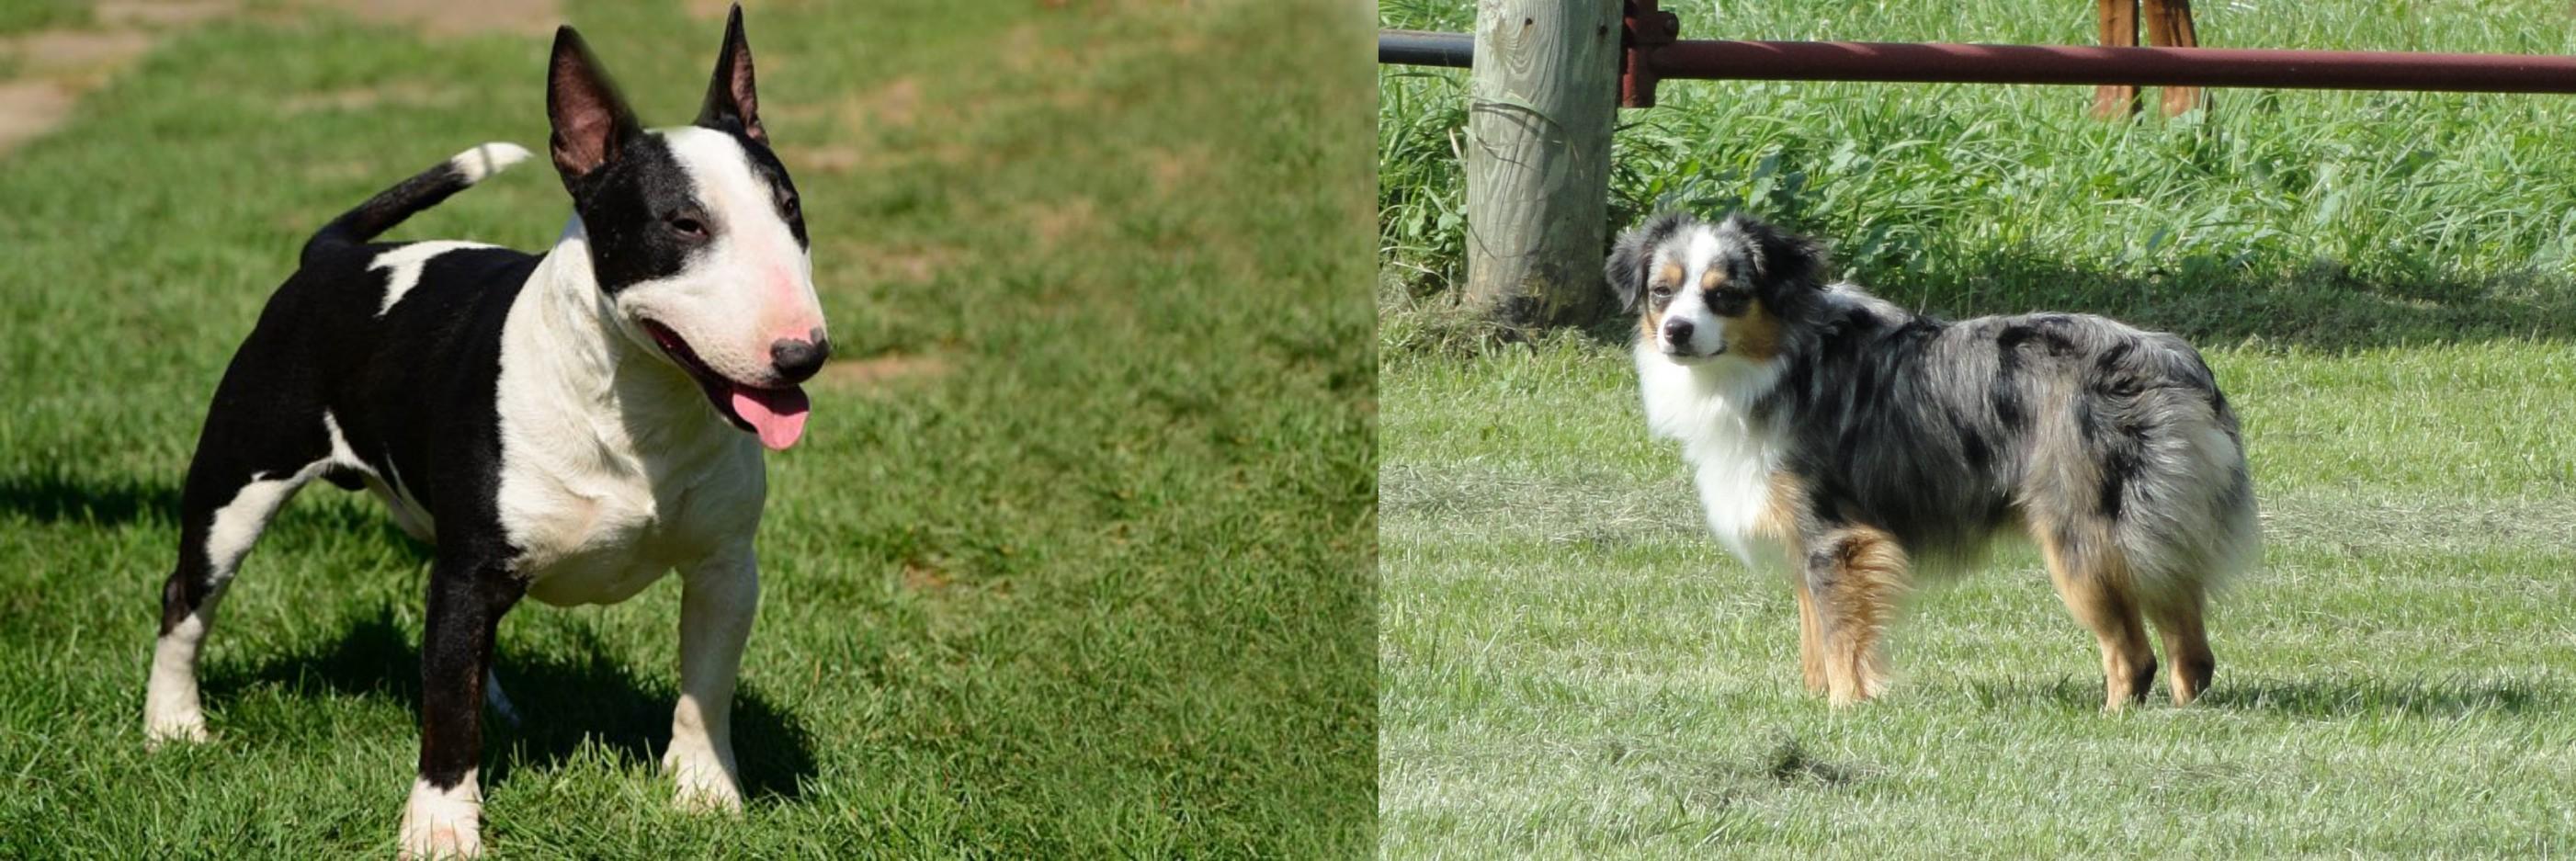 Toy Australian Shepherd vs Bull Terrier Miniature Breed